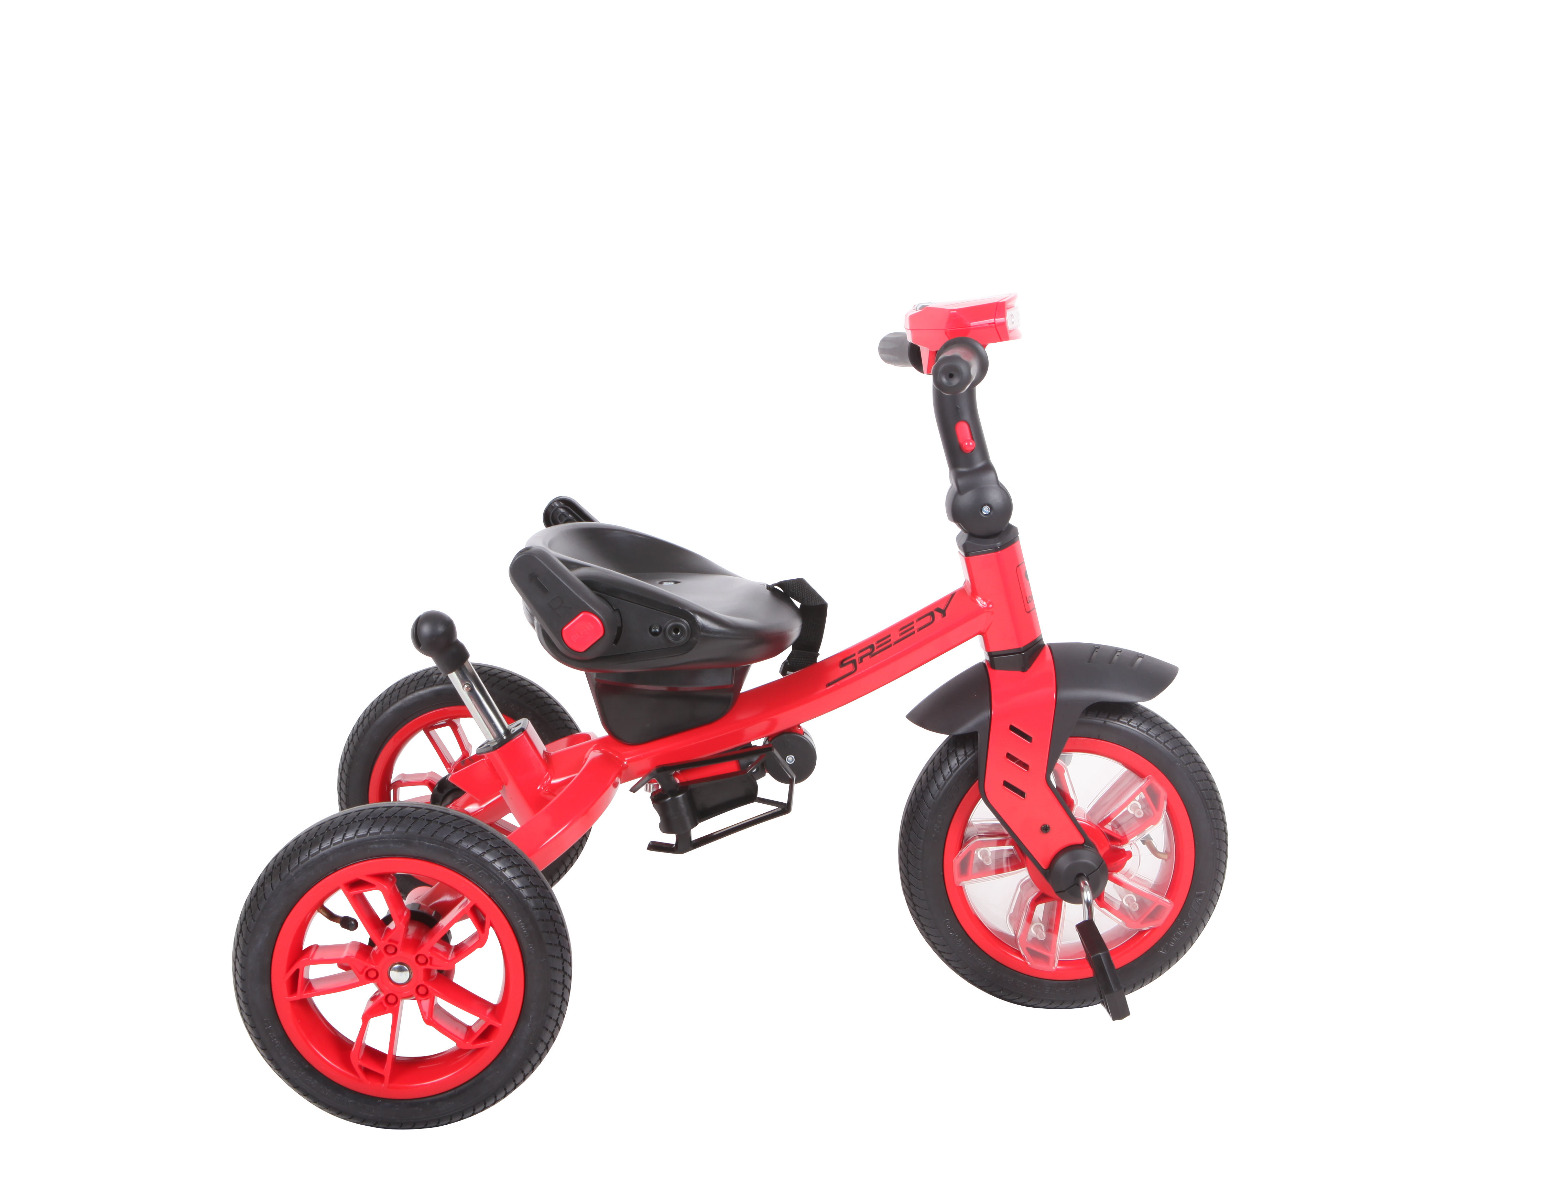 Tricicleta multifunctionala 4in1, Speedy, roti cu camera, scaun rotativ, Red & Black image 1